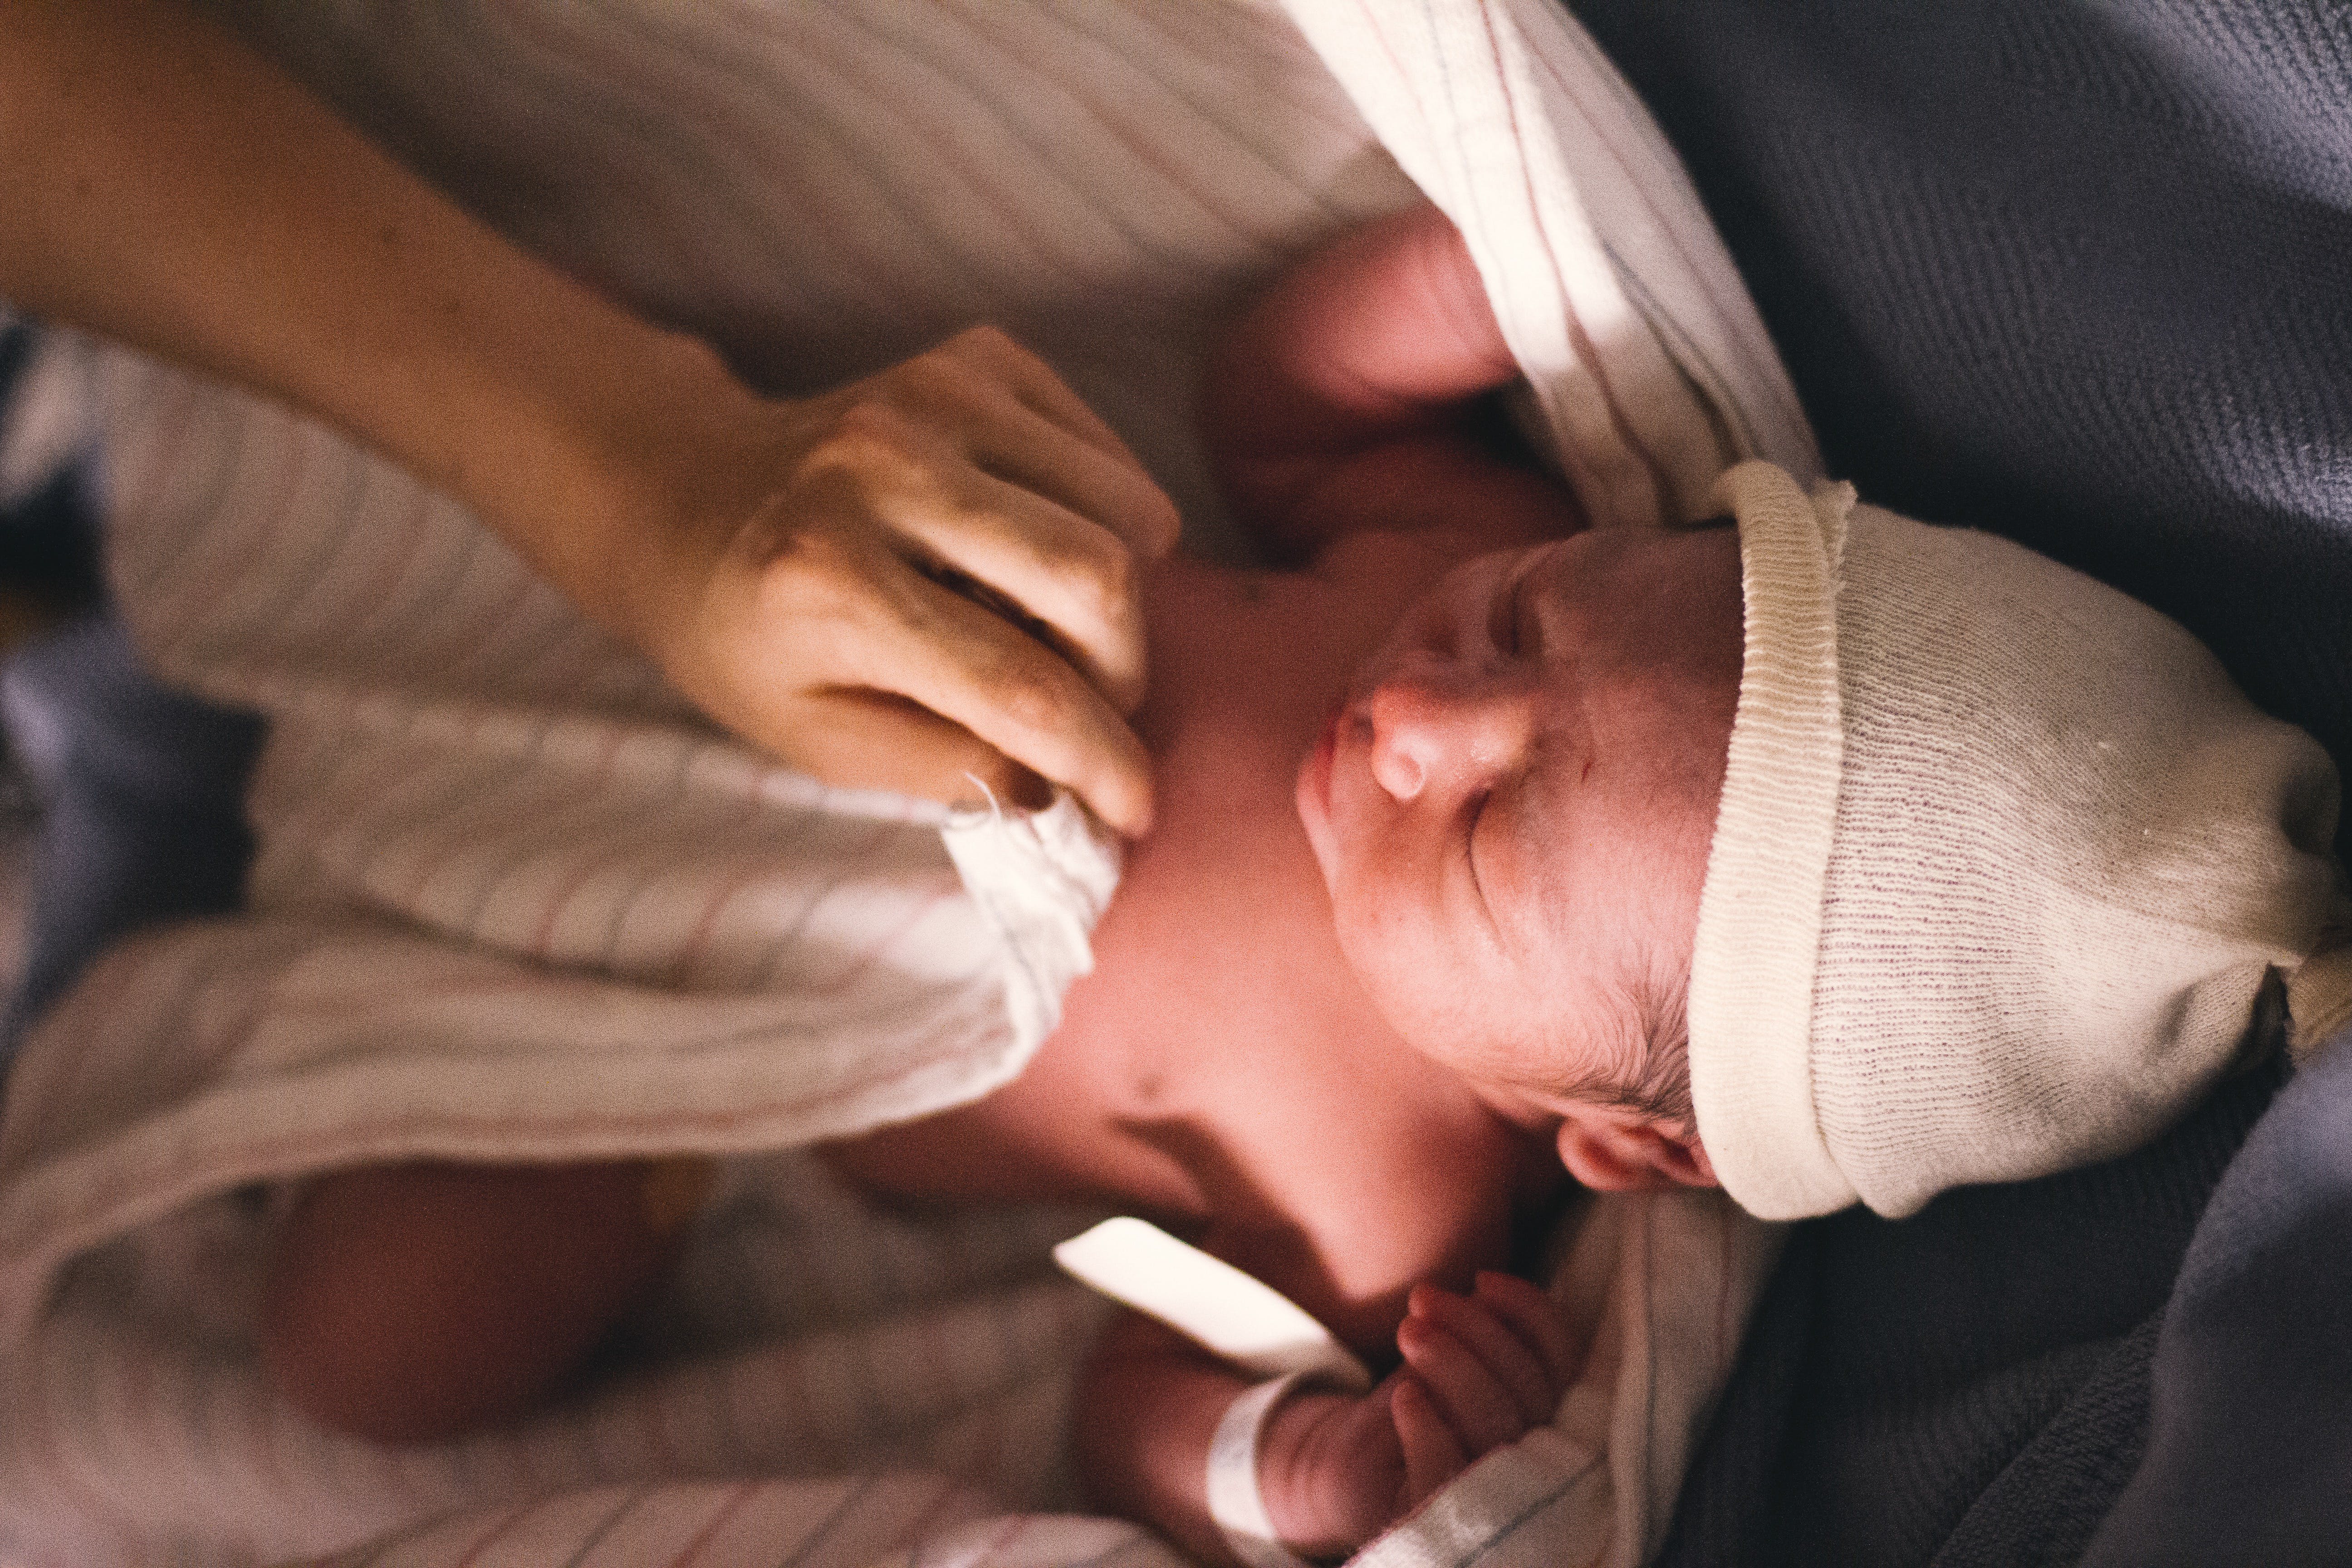 A newborn child | Source: Pexels